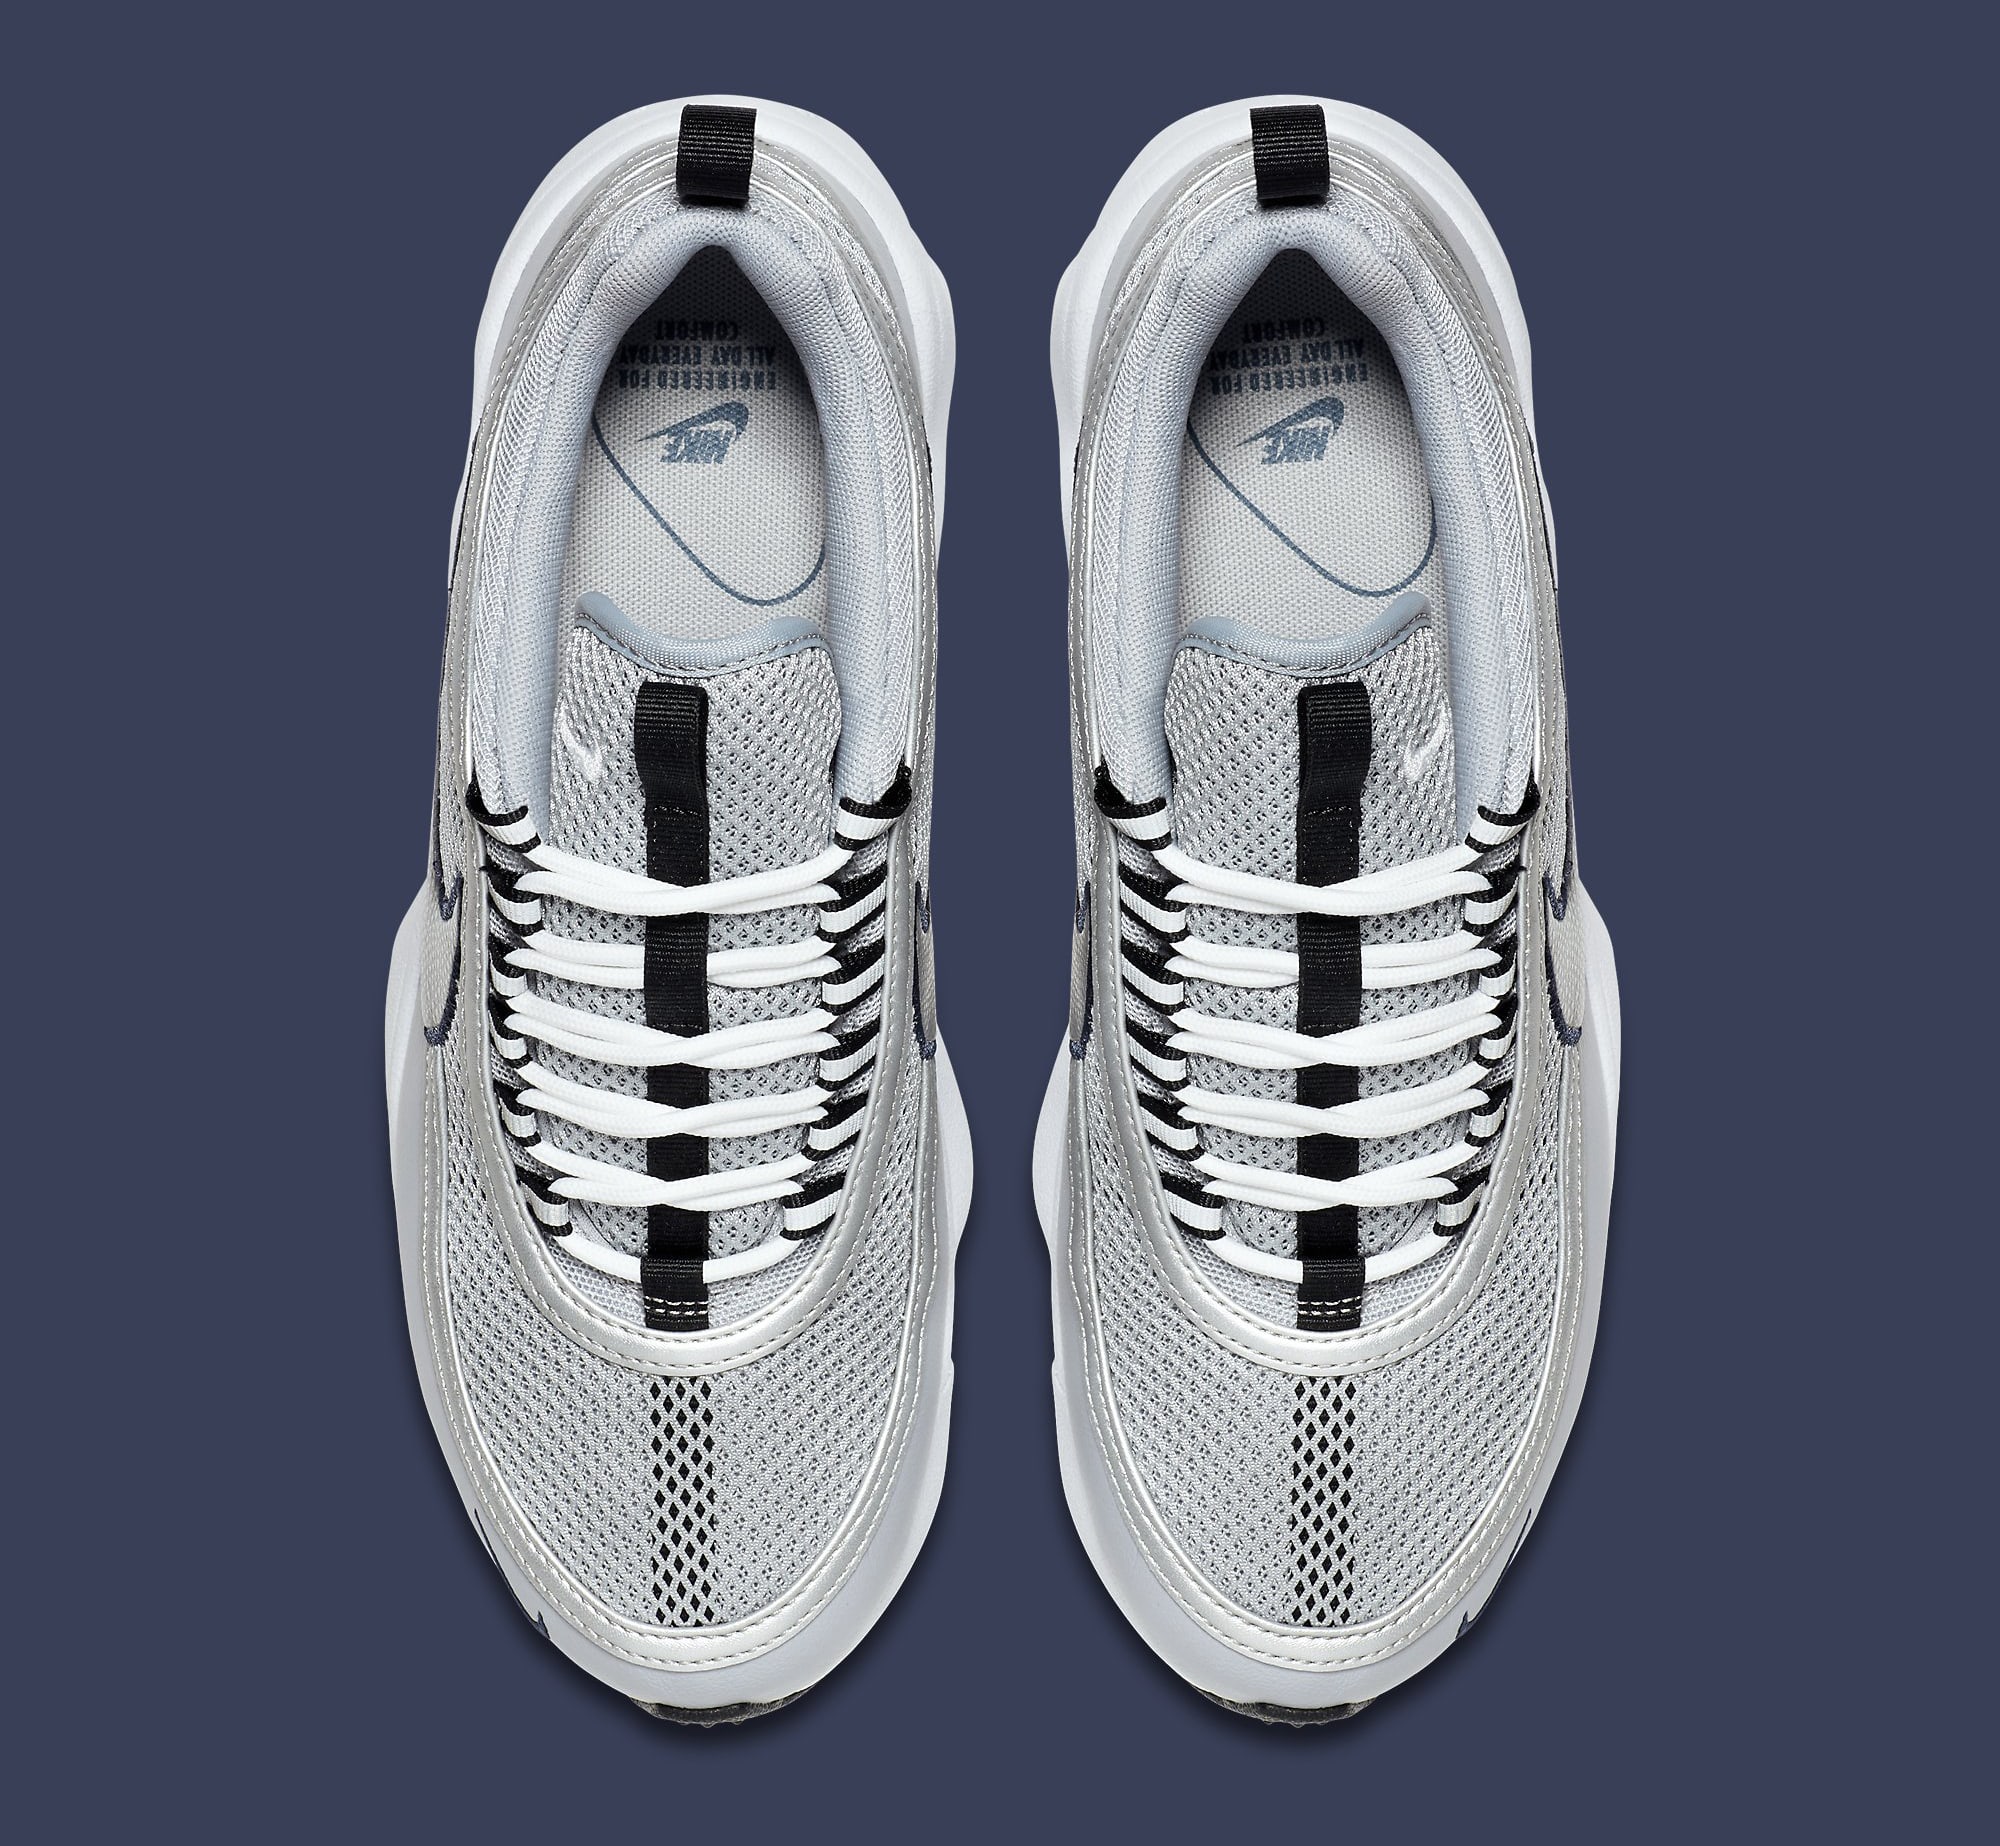 Nike Spiridon Grey Navy 905221-001 Top